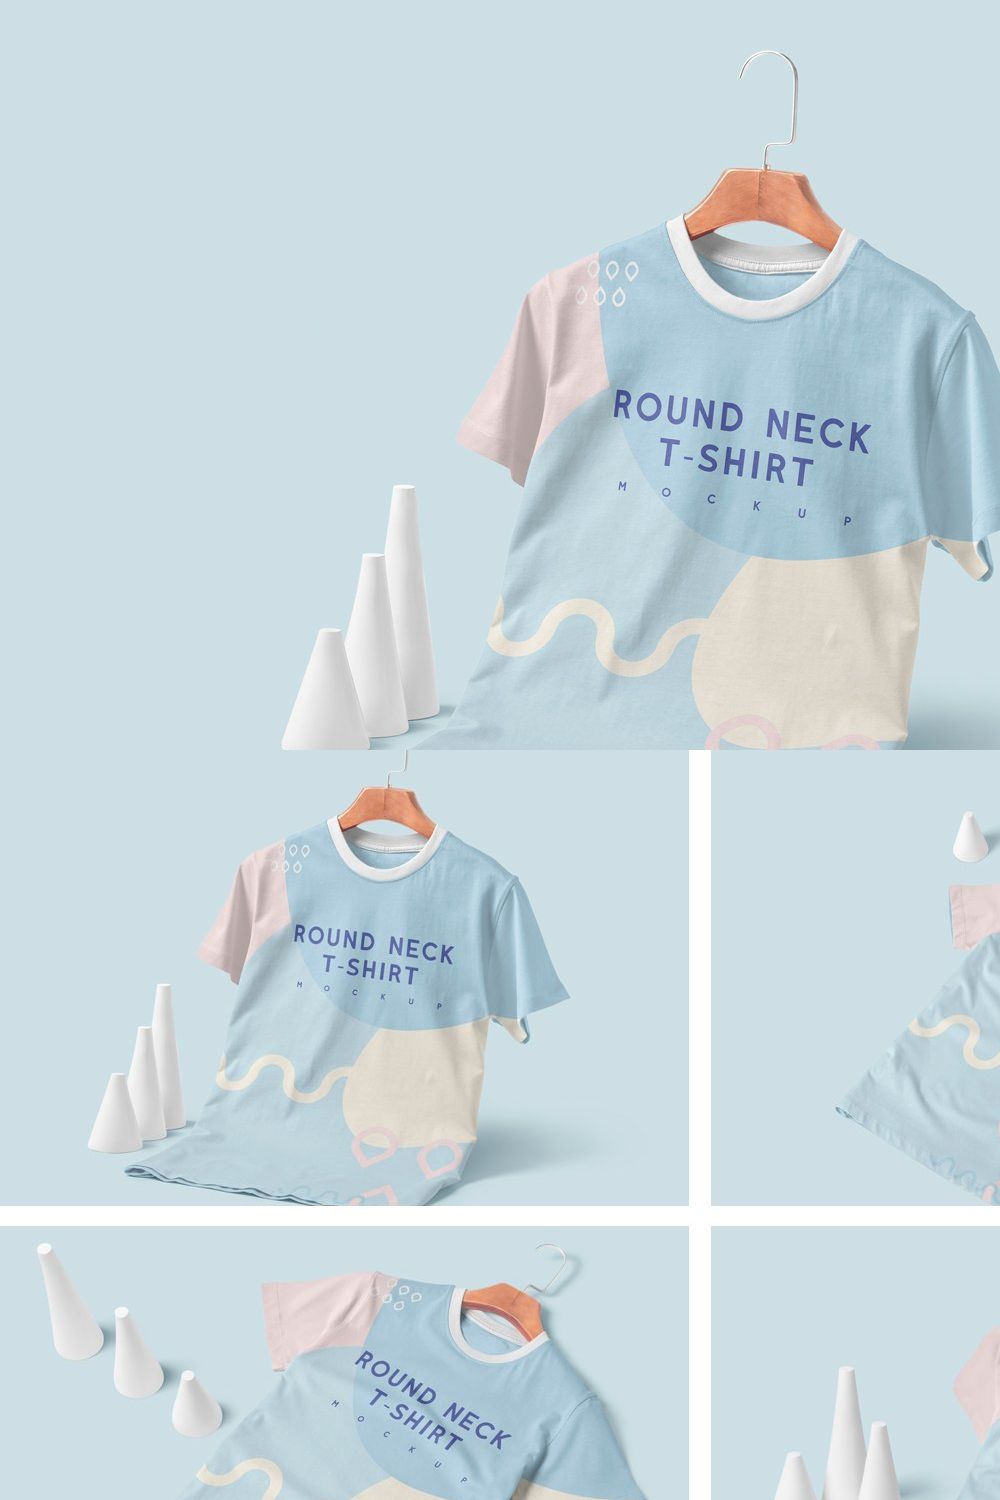 Modish Round Neck T-Shirts Mockups pinterest preview image.